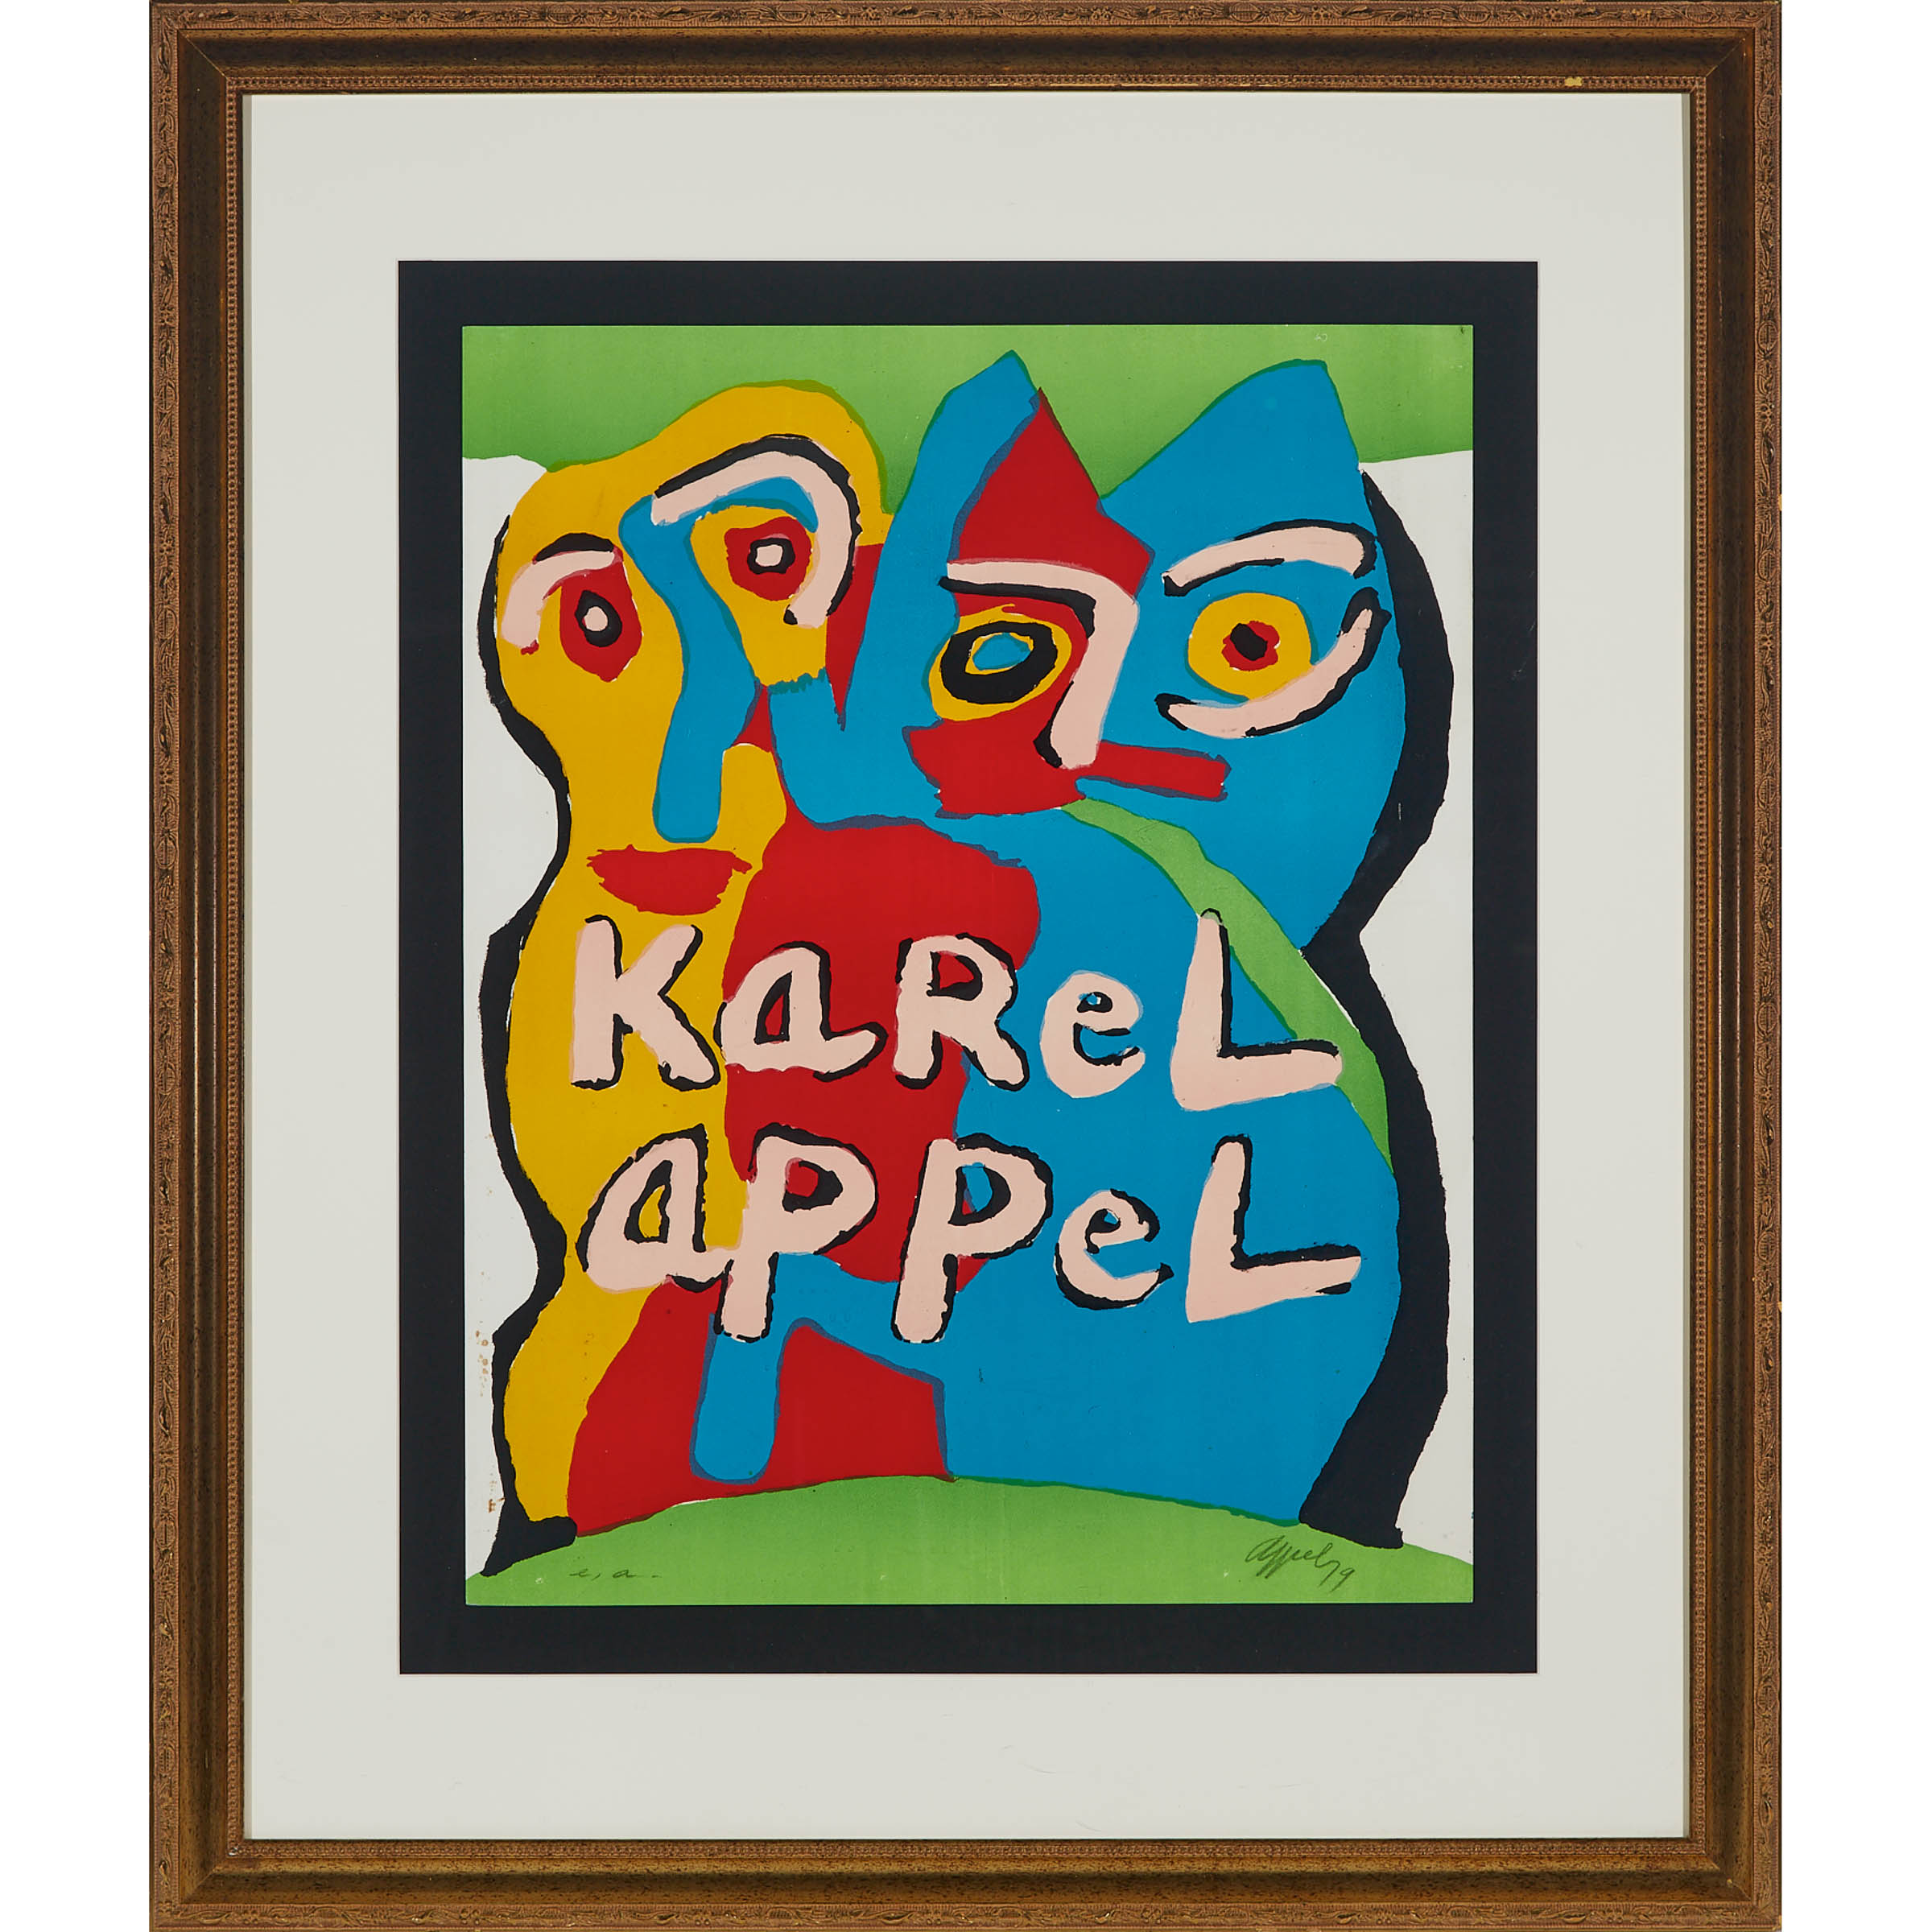 Karel Appel (1921-2006)